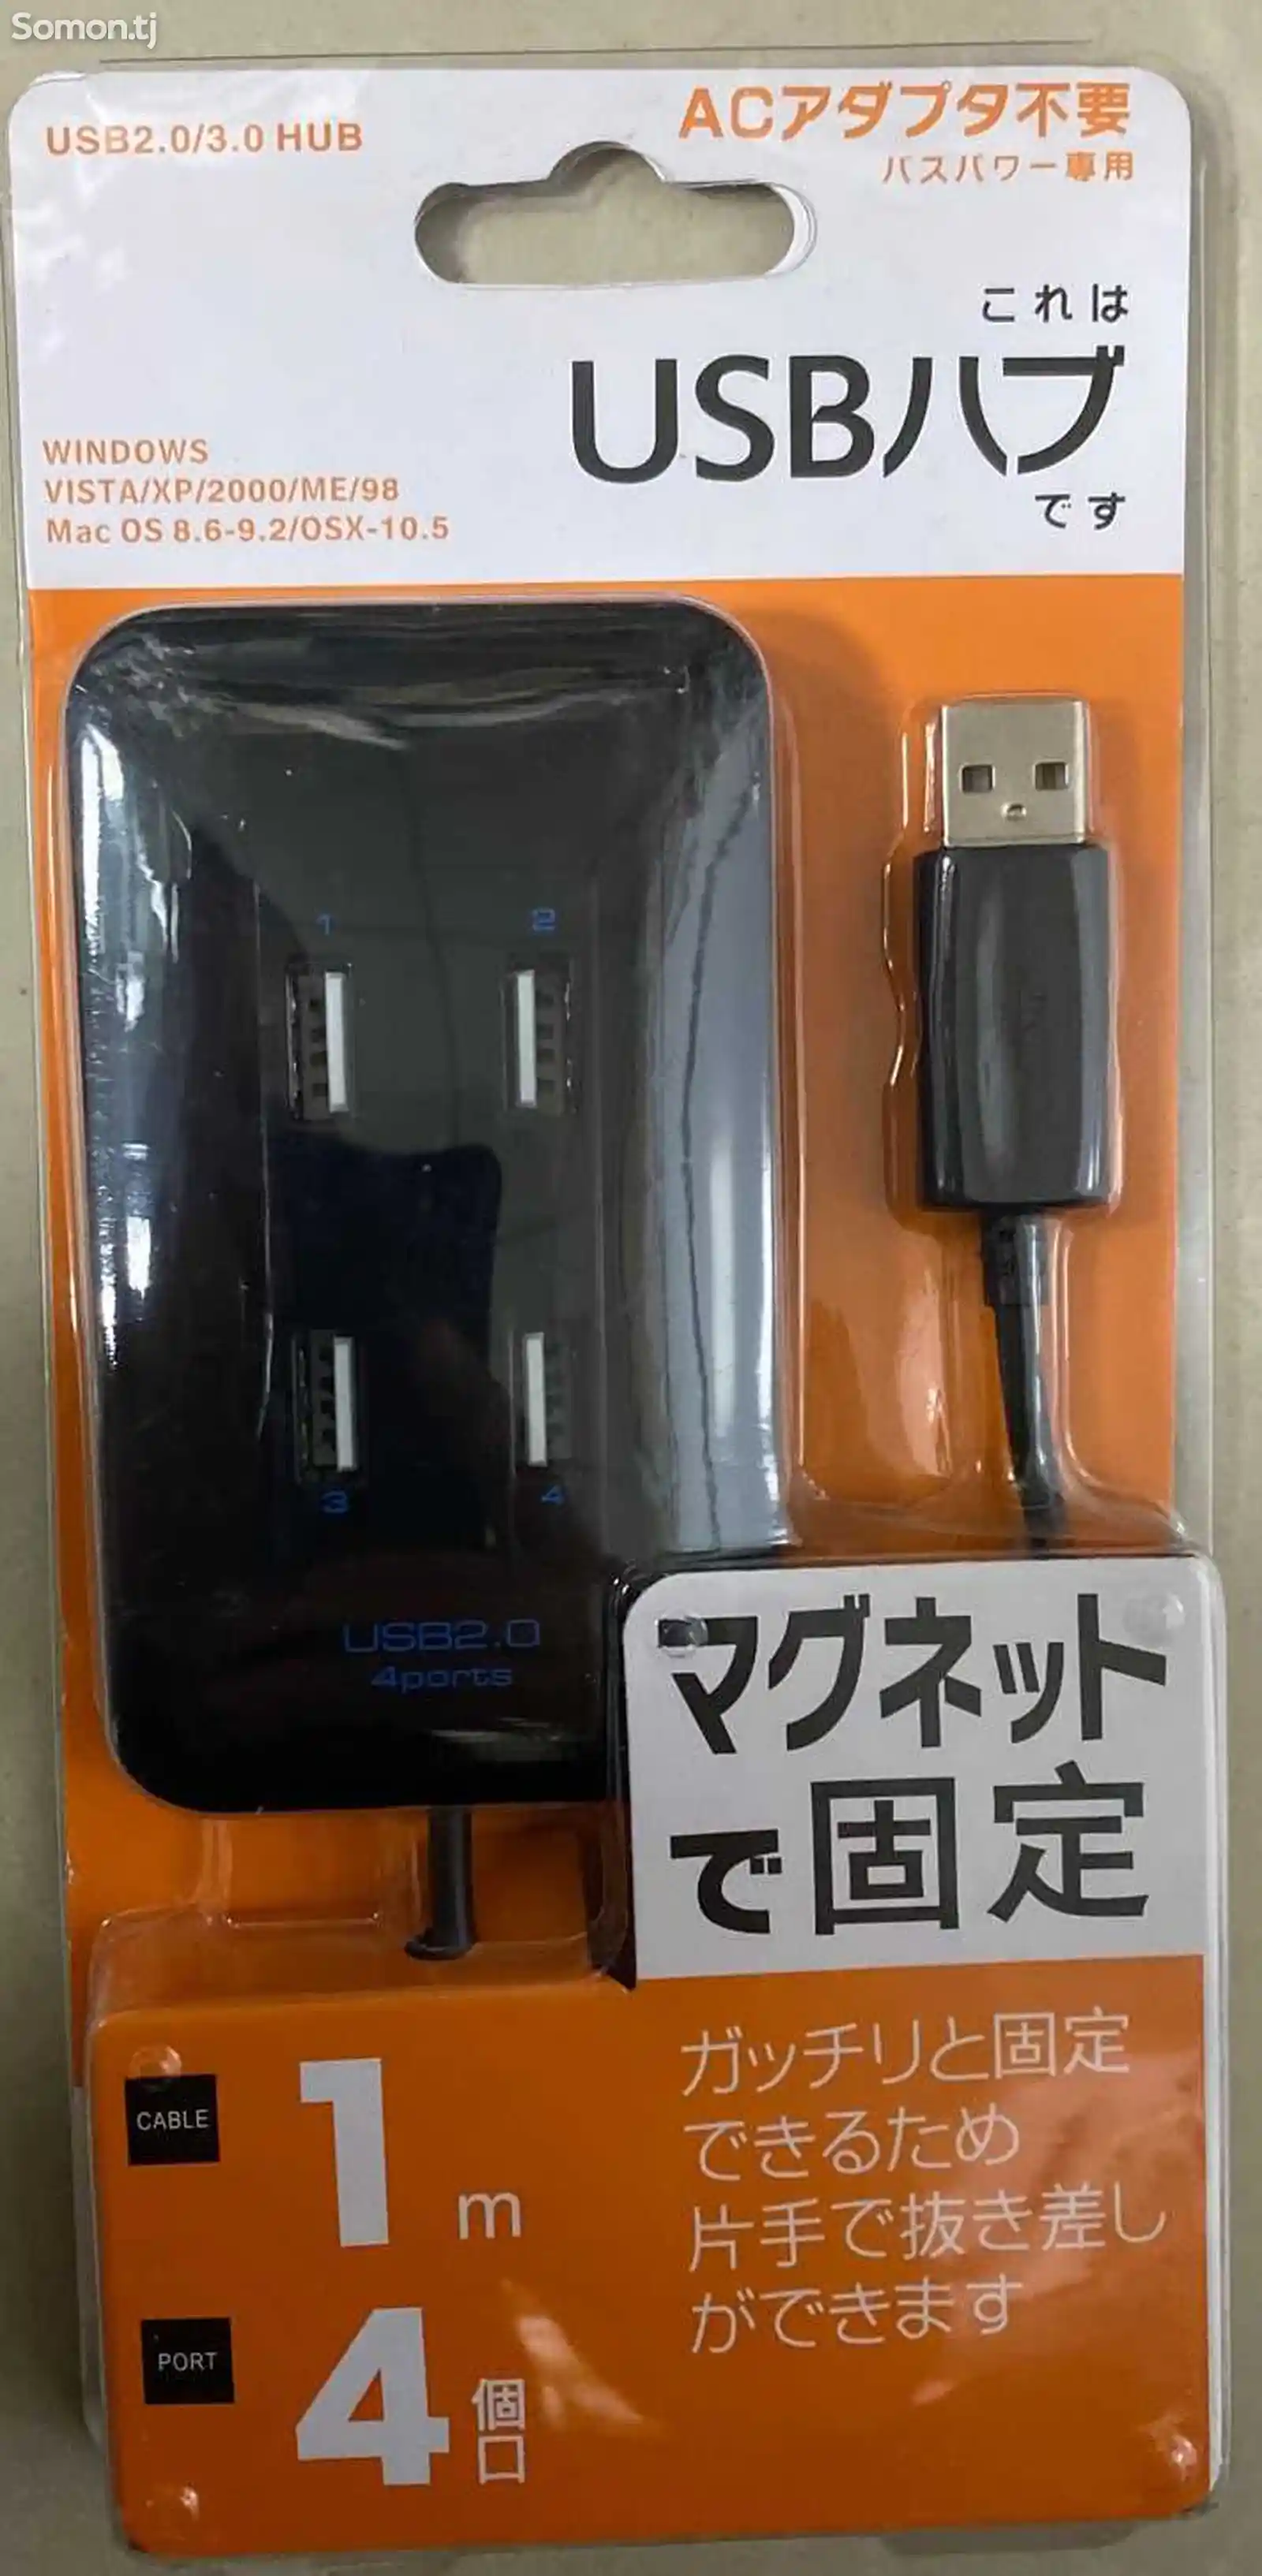 USB 2.0 HUB-1